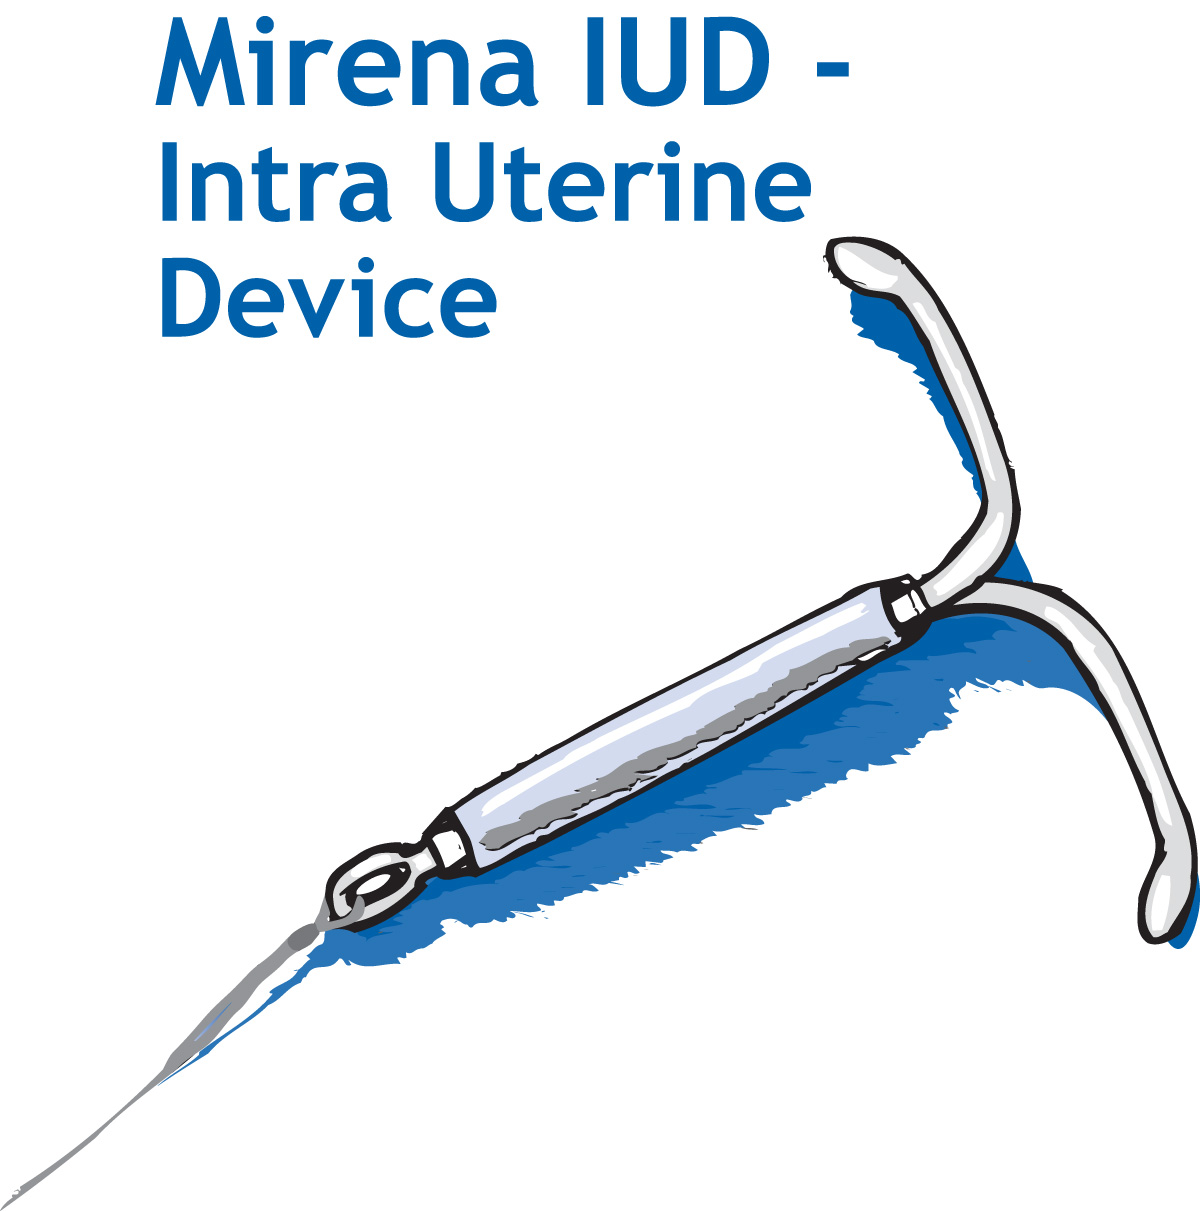 FDA Approves Mirena for Heavy Bleeding